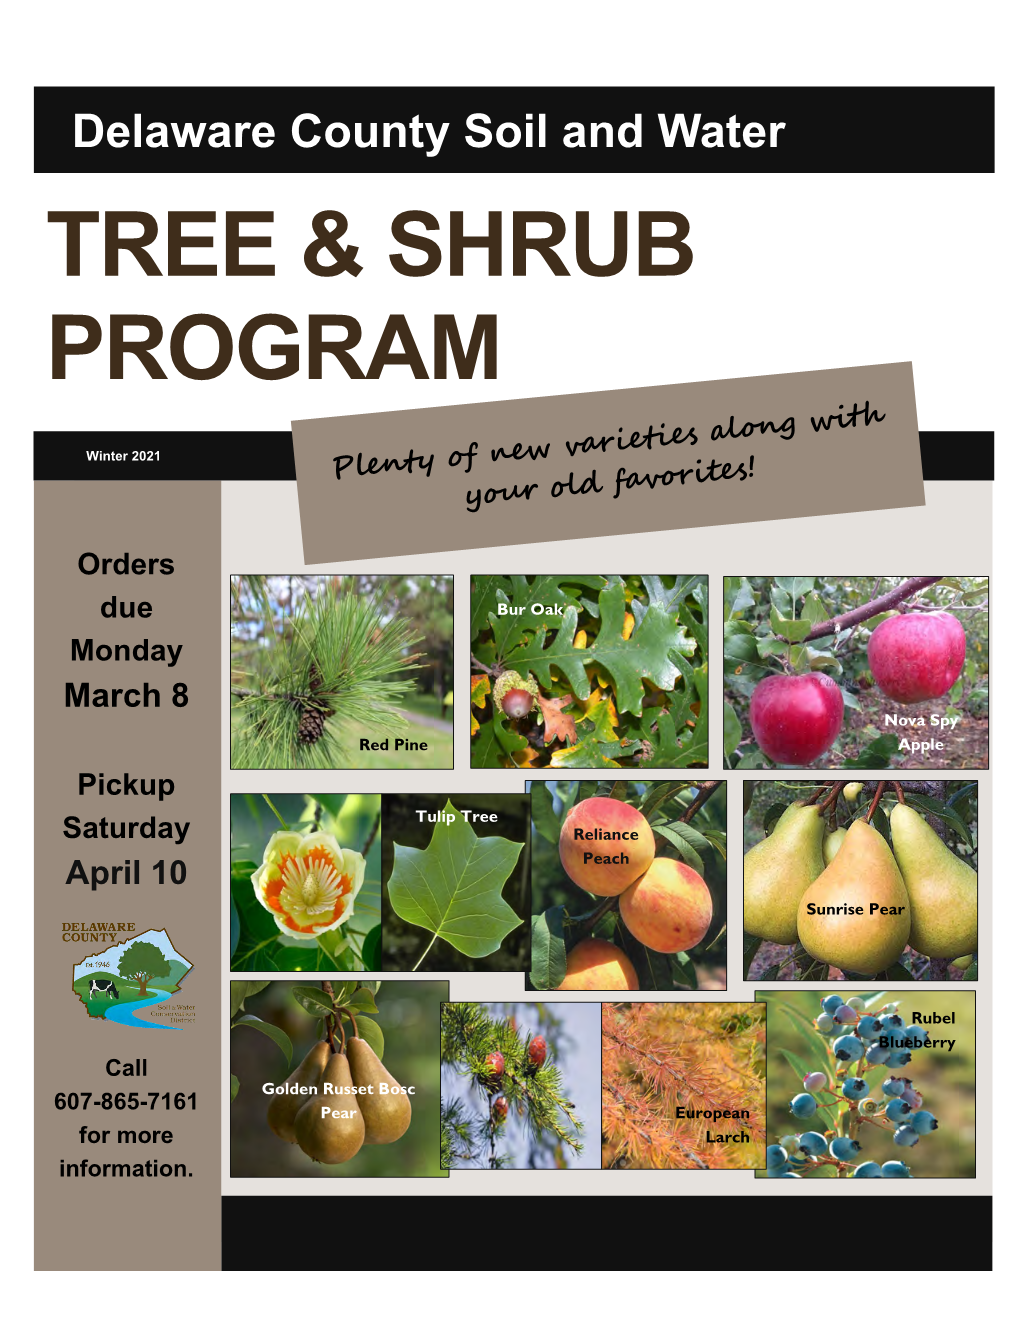 Tree & Shrub Program